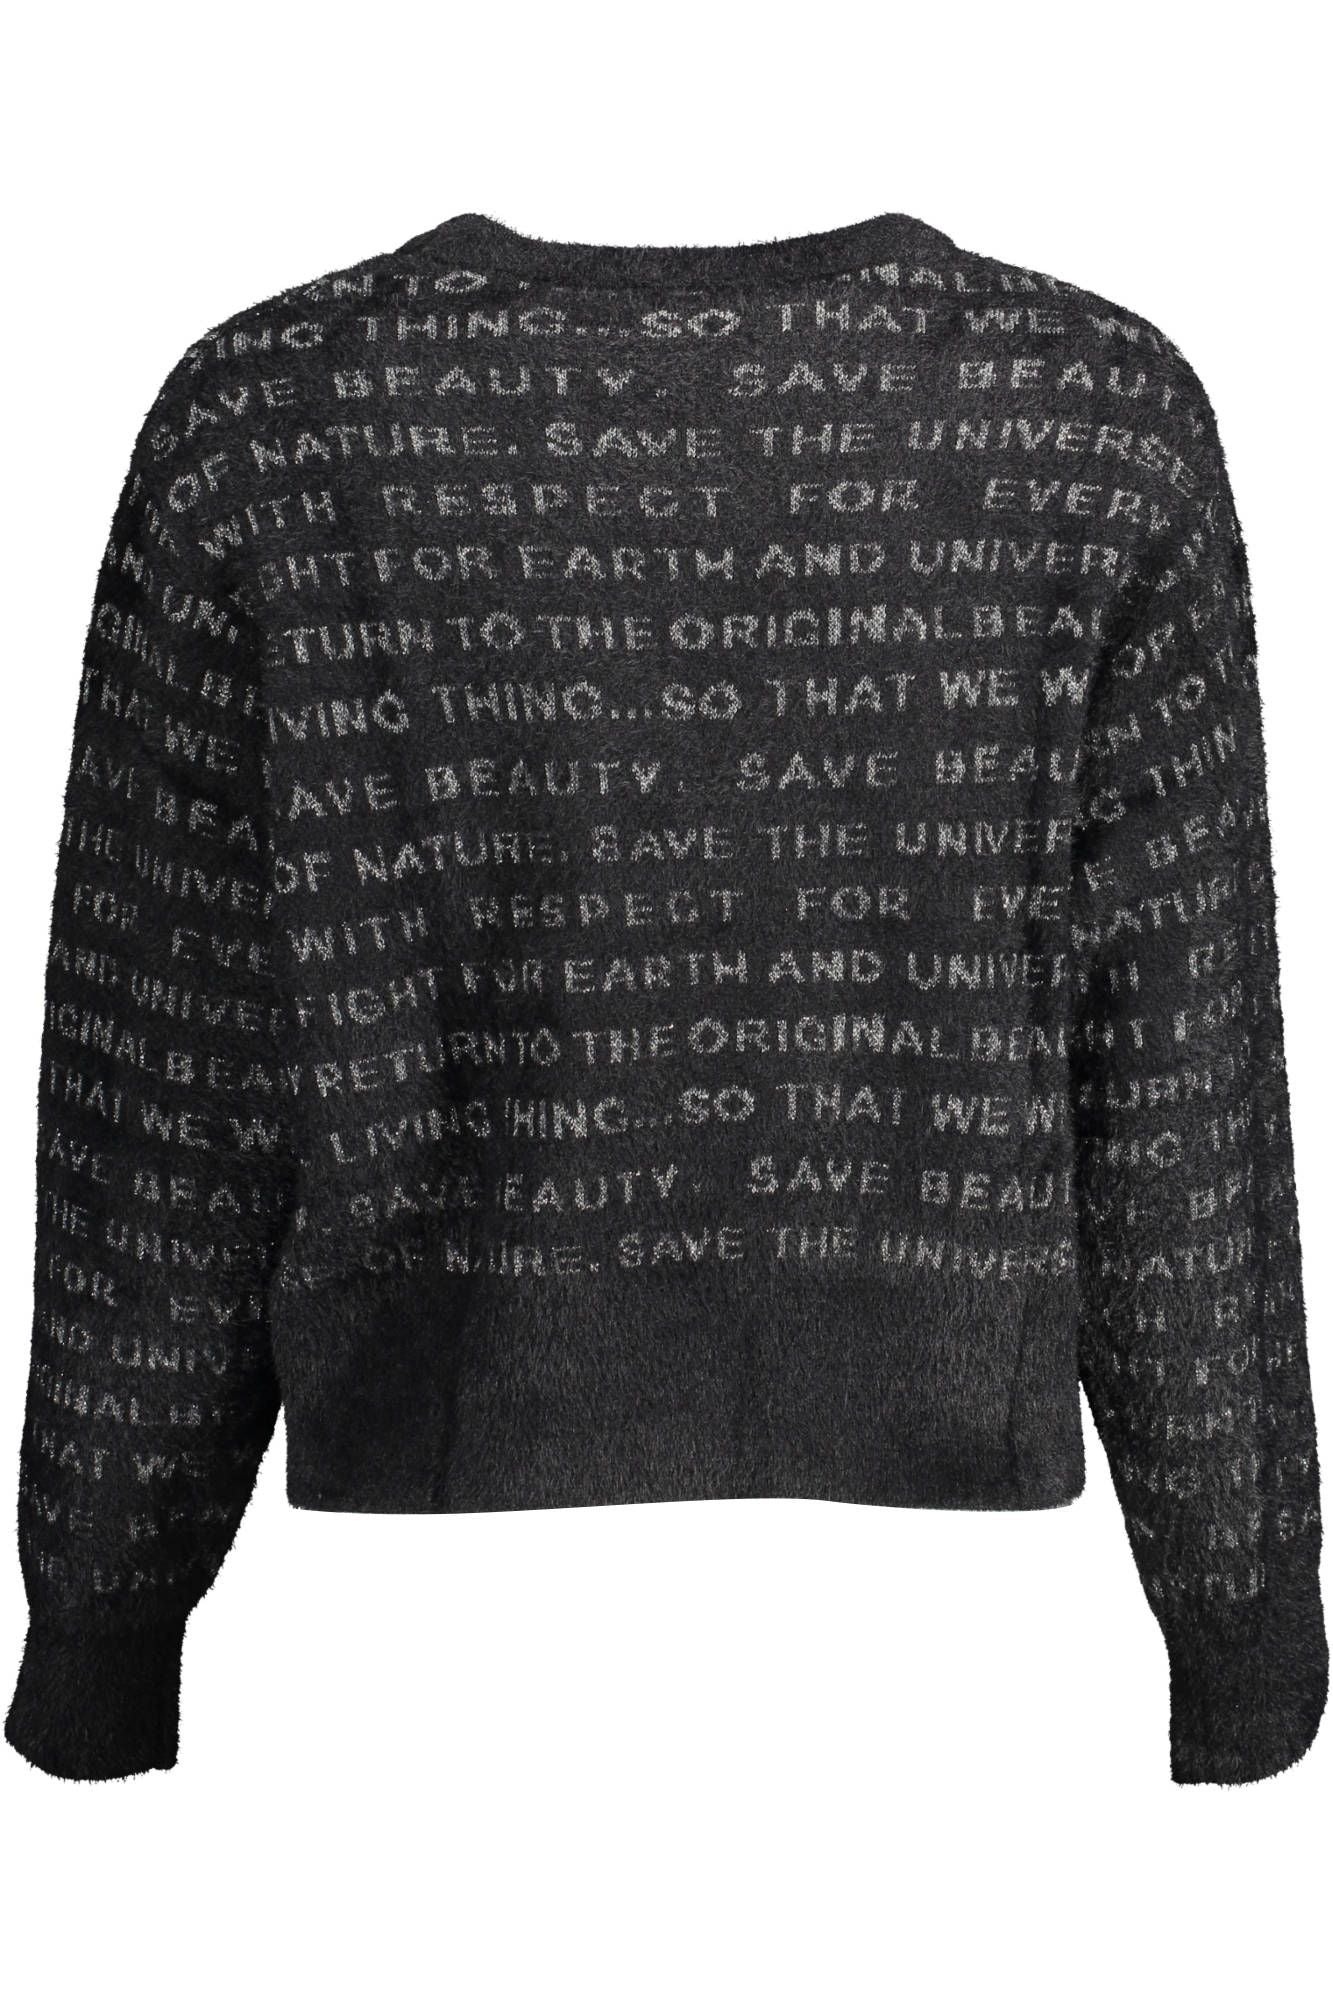 Desigual Women's Black Polyester Round Neck Sweater